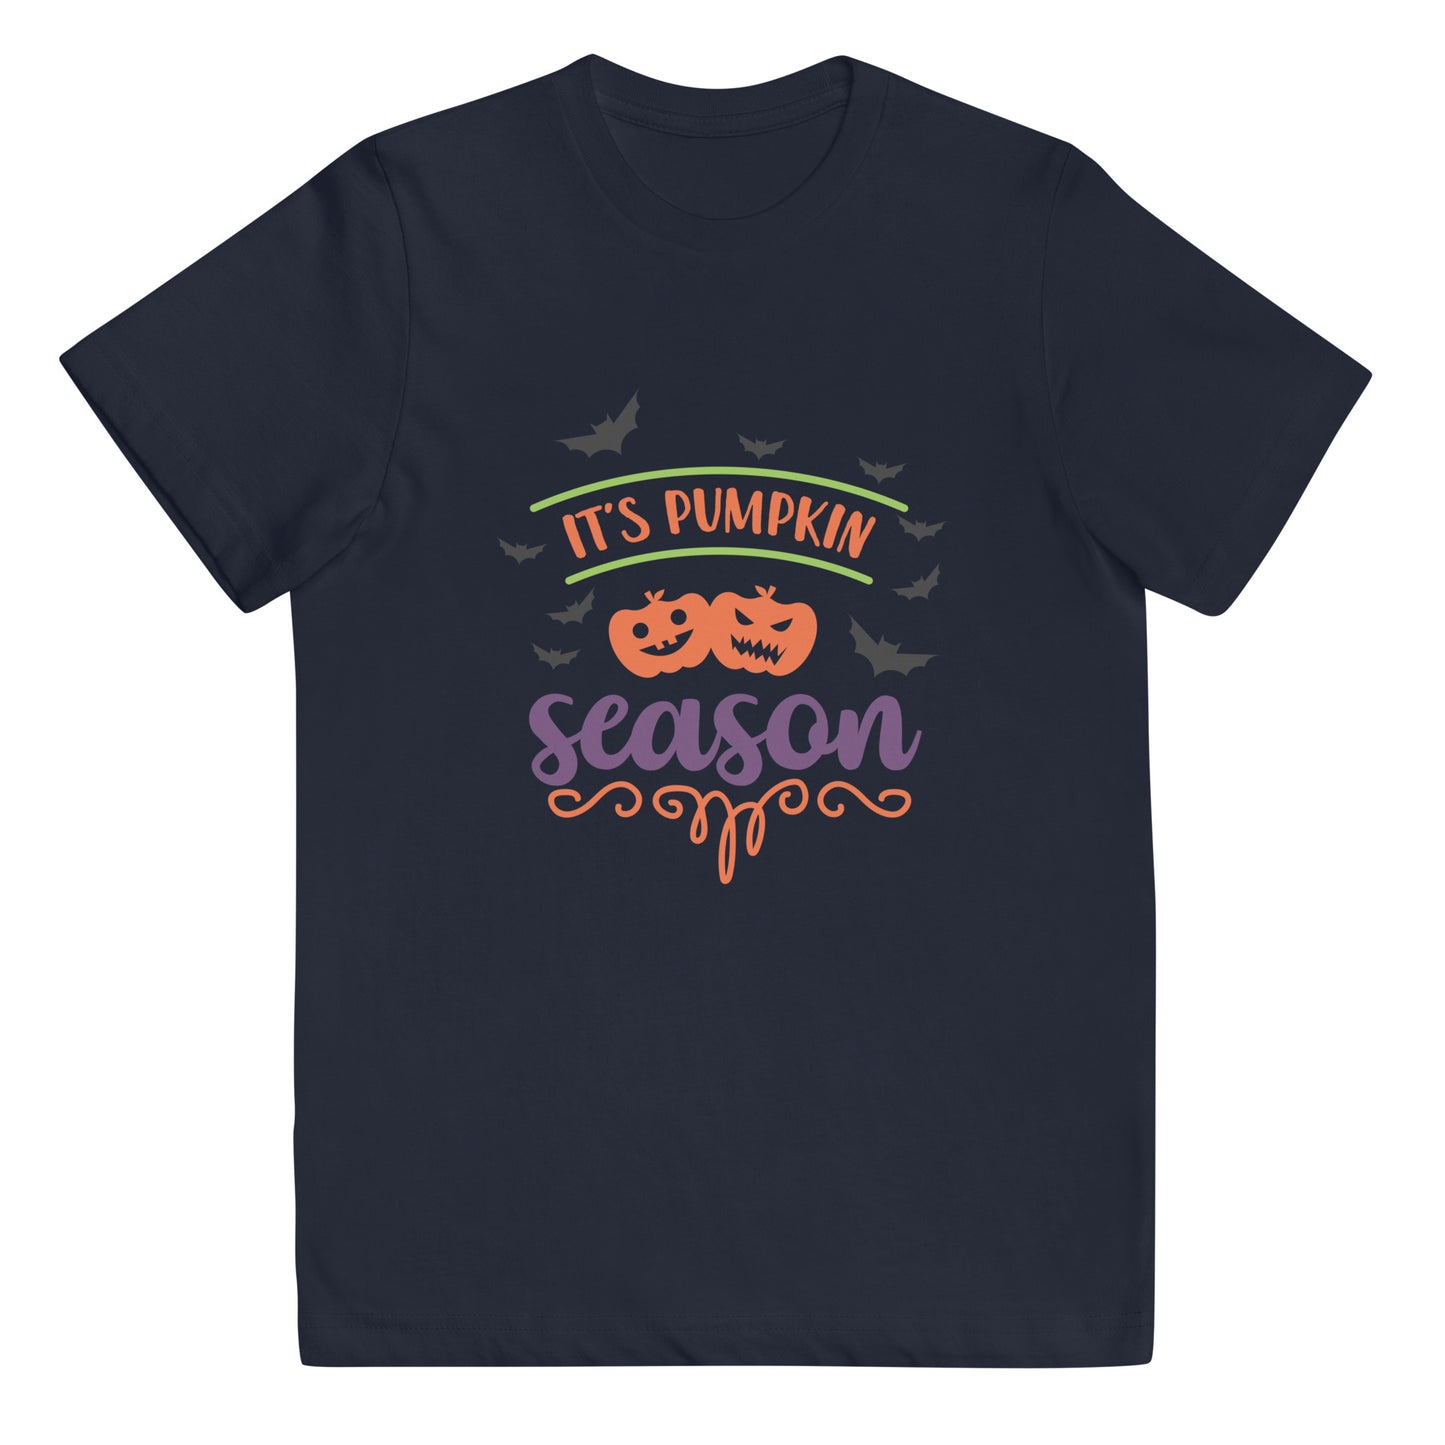 It's Pumpkin Season Youth jersey t-shirt